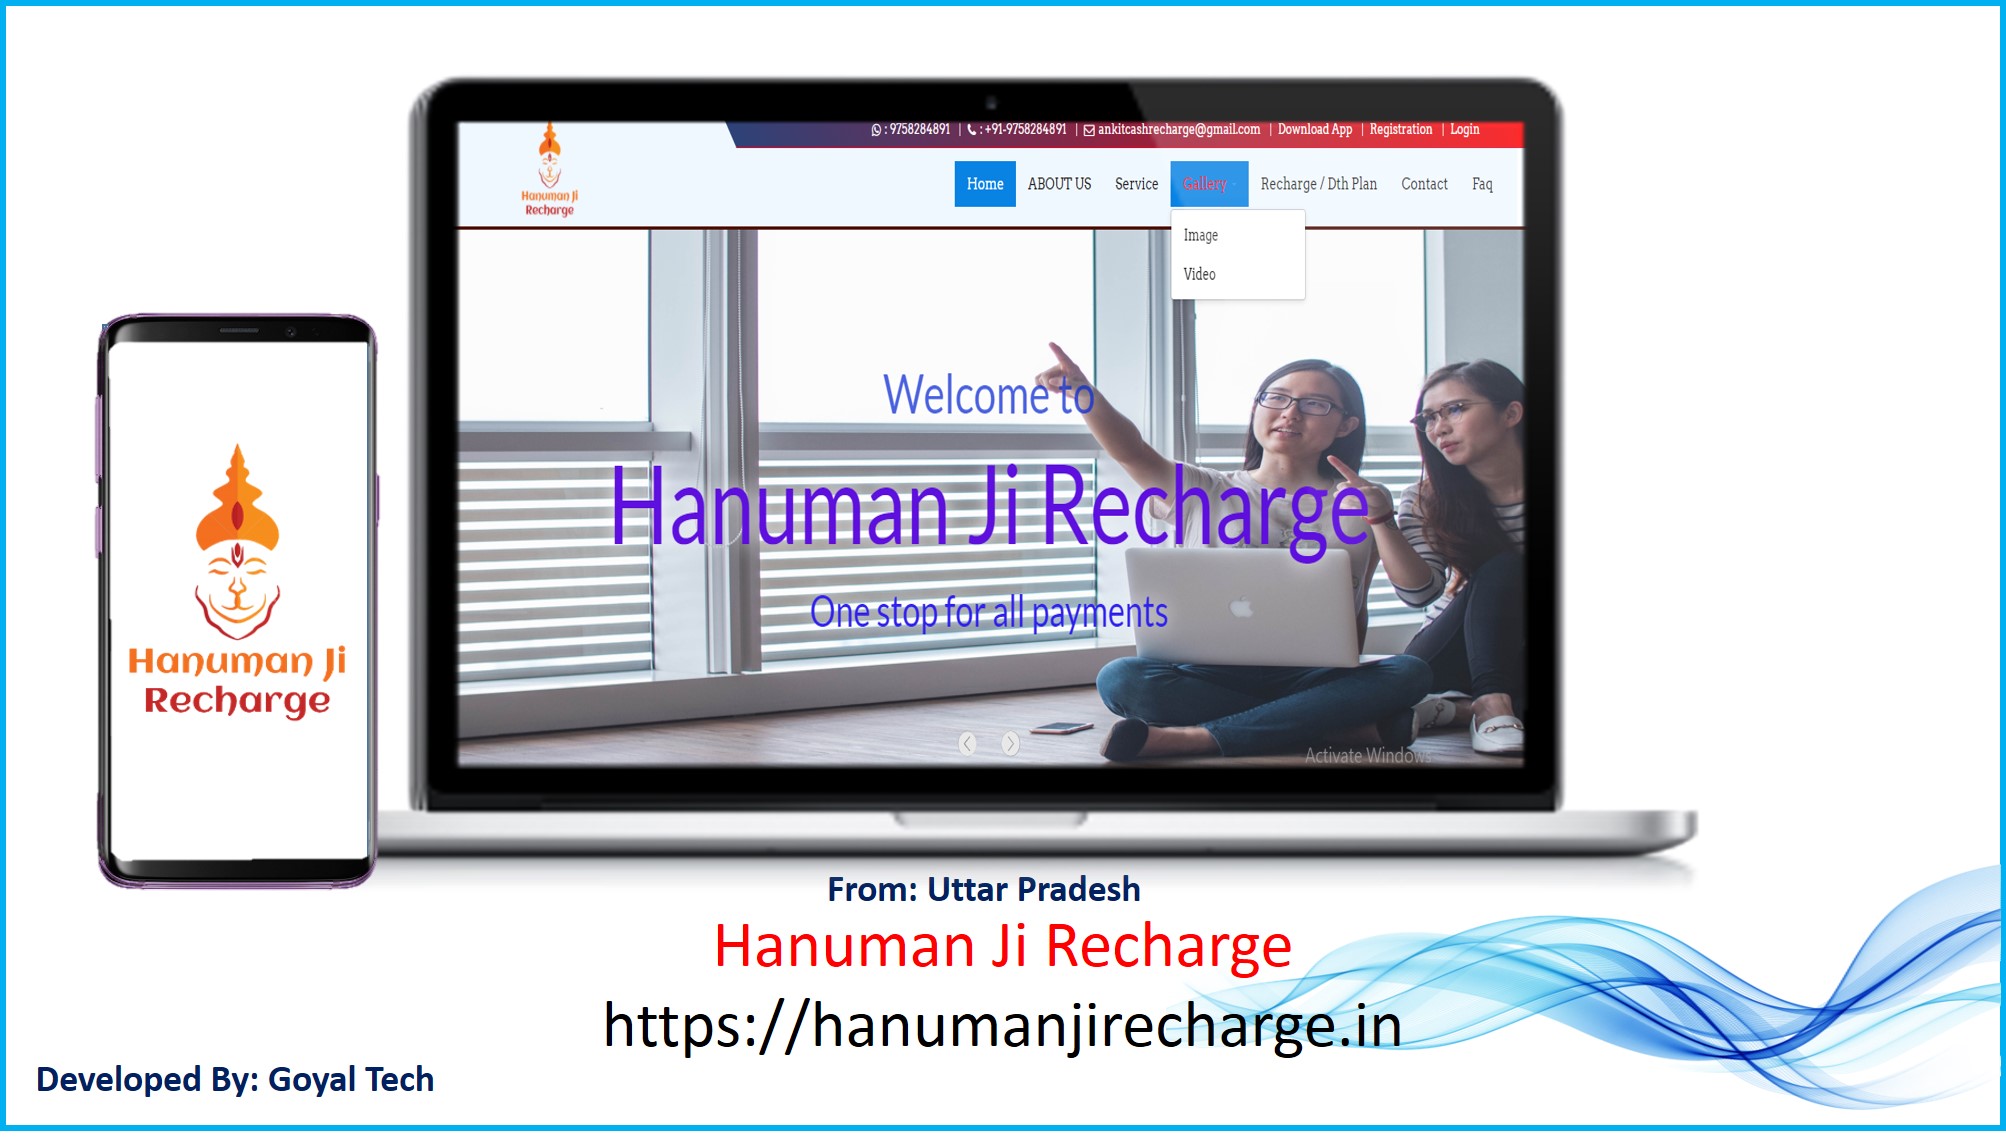 Hanuman Ji Recharge